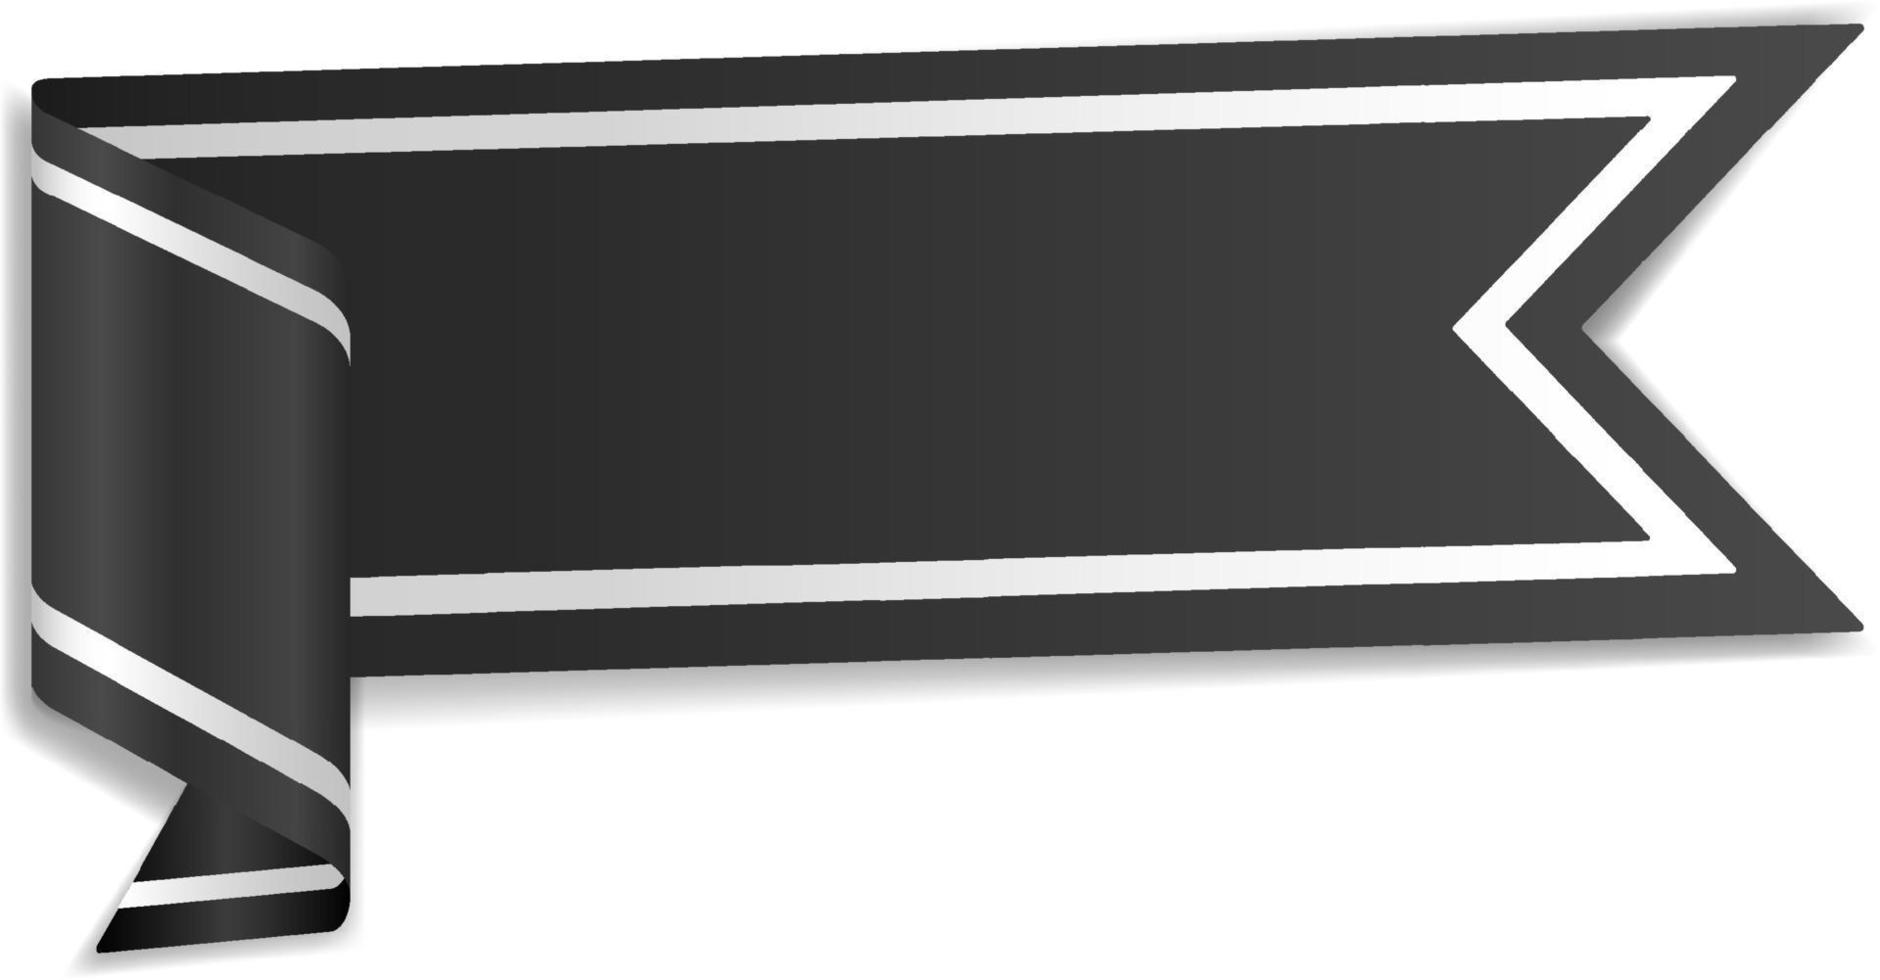 design de banner preto sobre fundo branco vetor